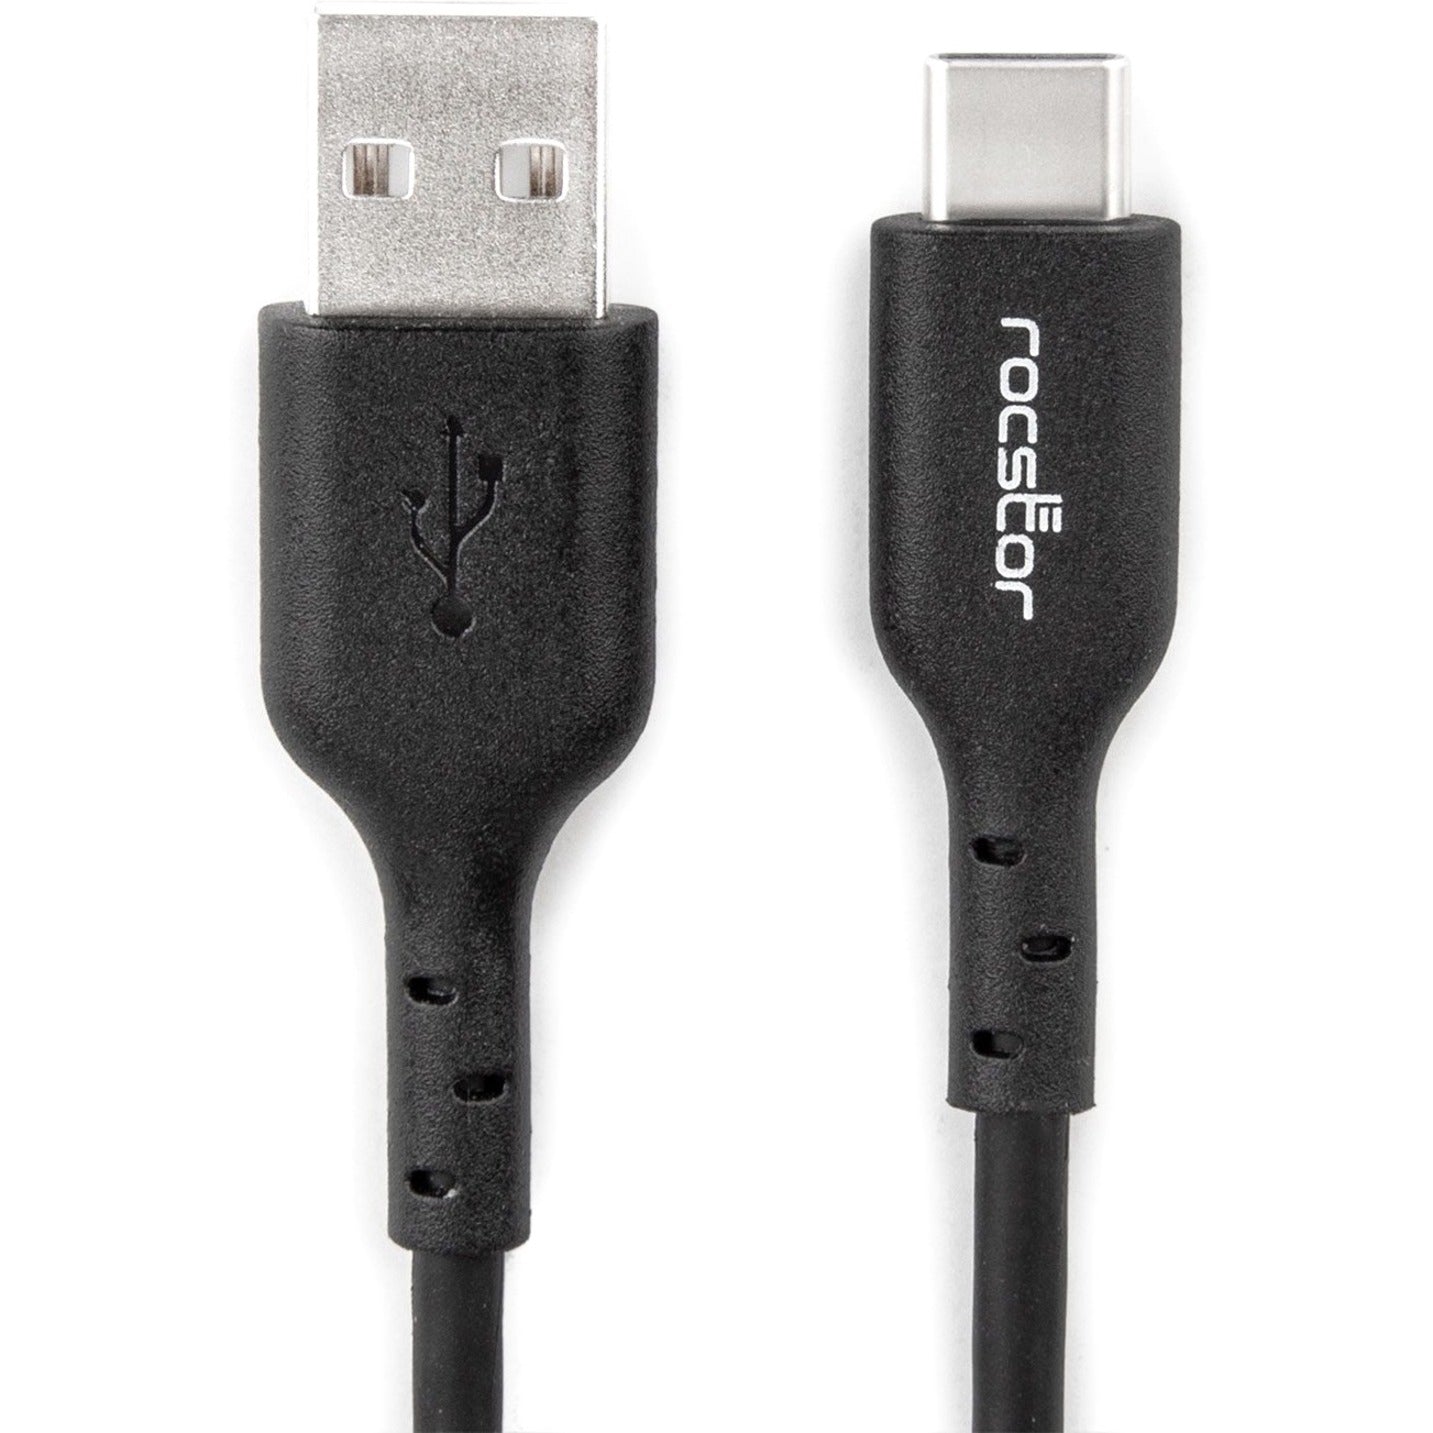 Rocstor Y10C144-B1 Premium USB Data Transfer Cable, 3 ft, Reversible, Black